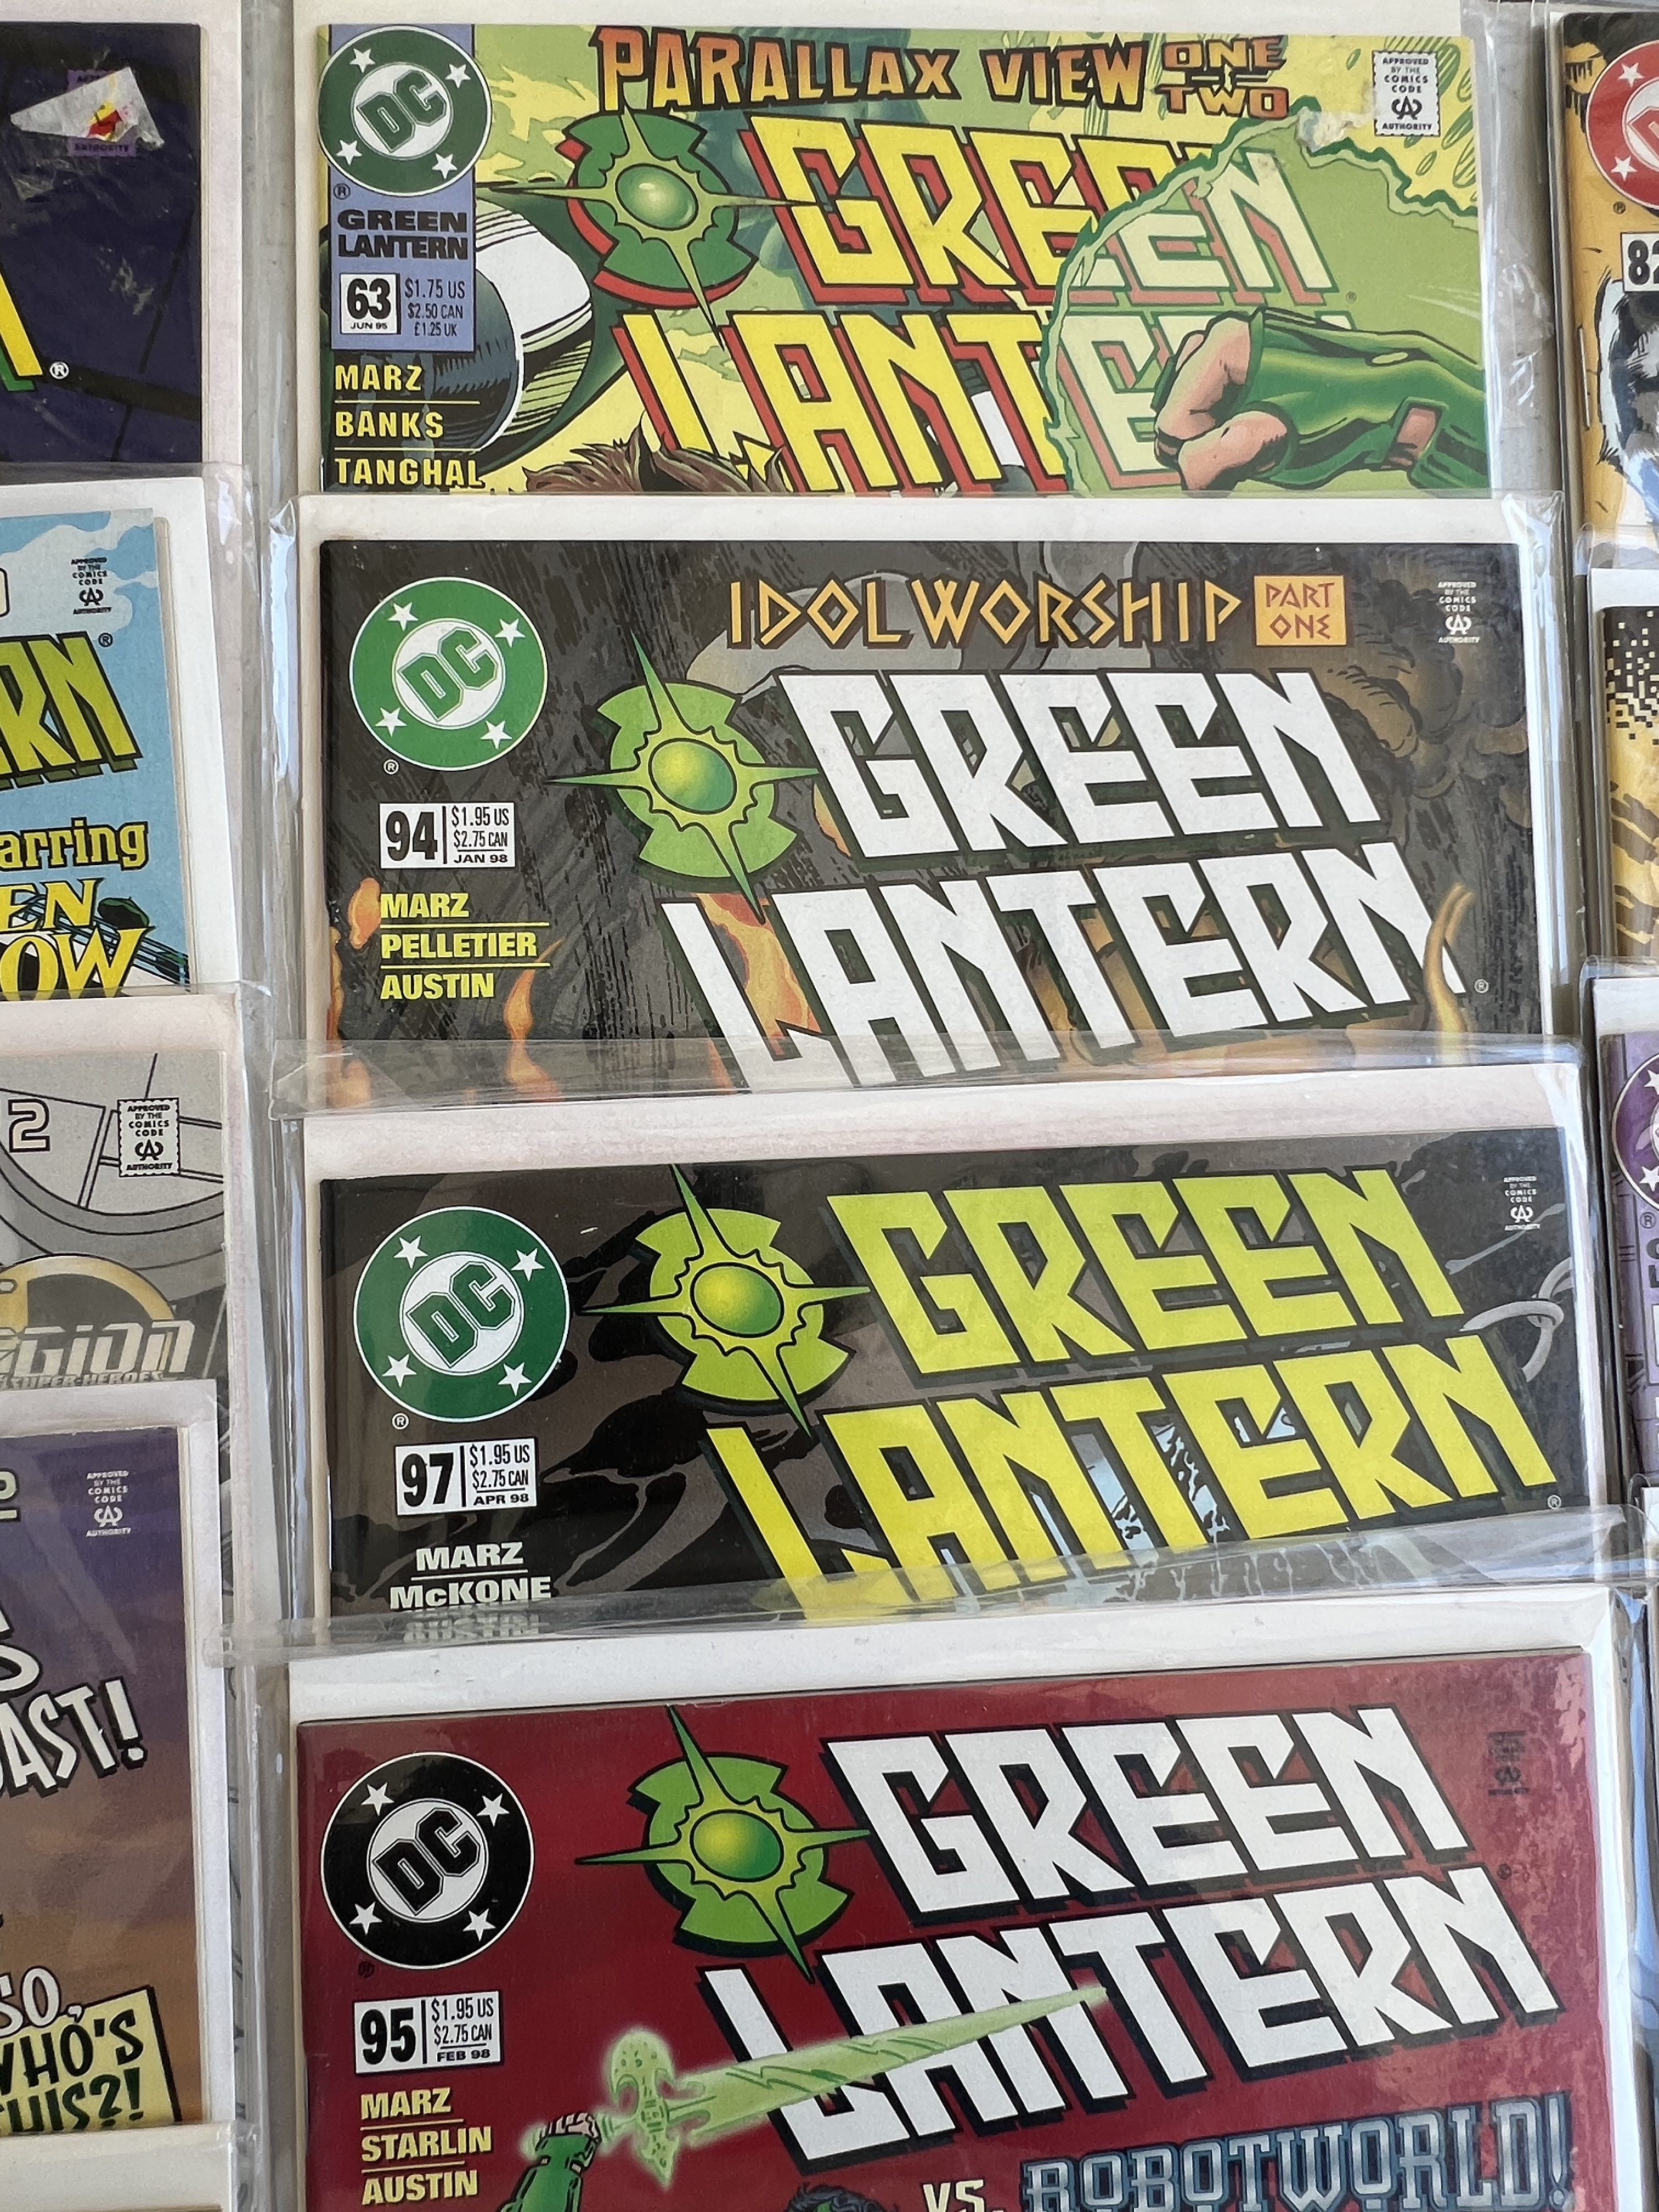 Comic Book Green Lantern collection lot 30 DC comics